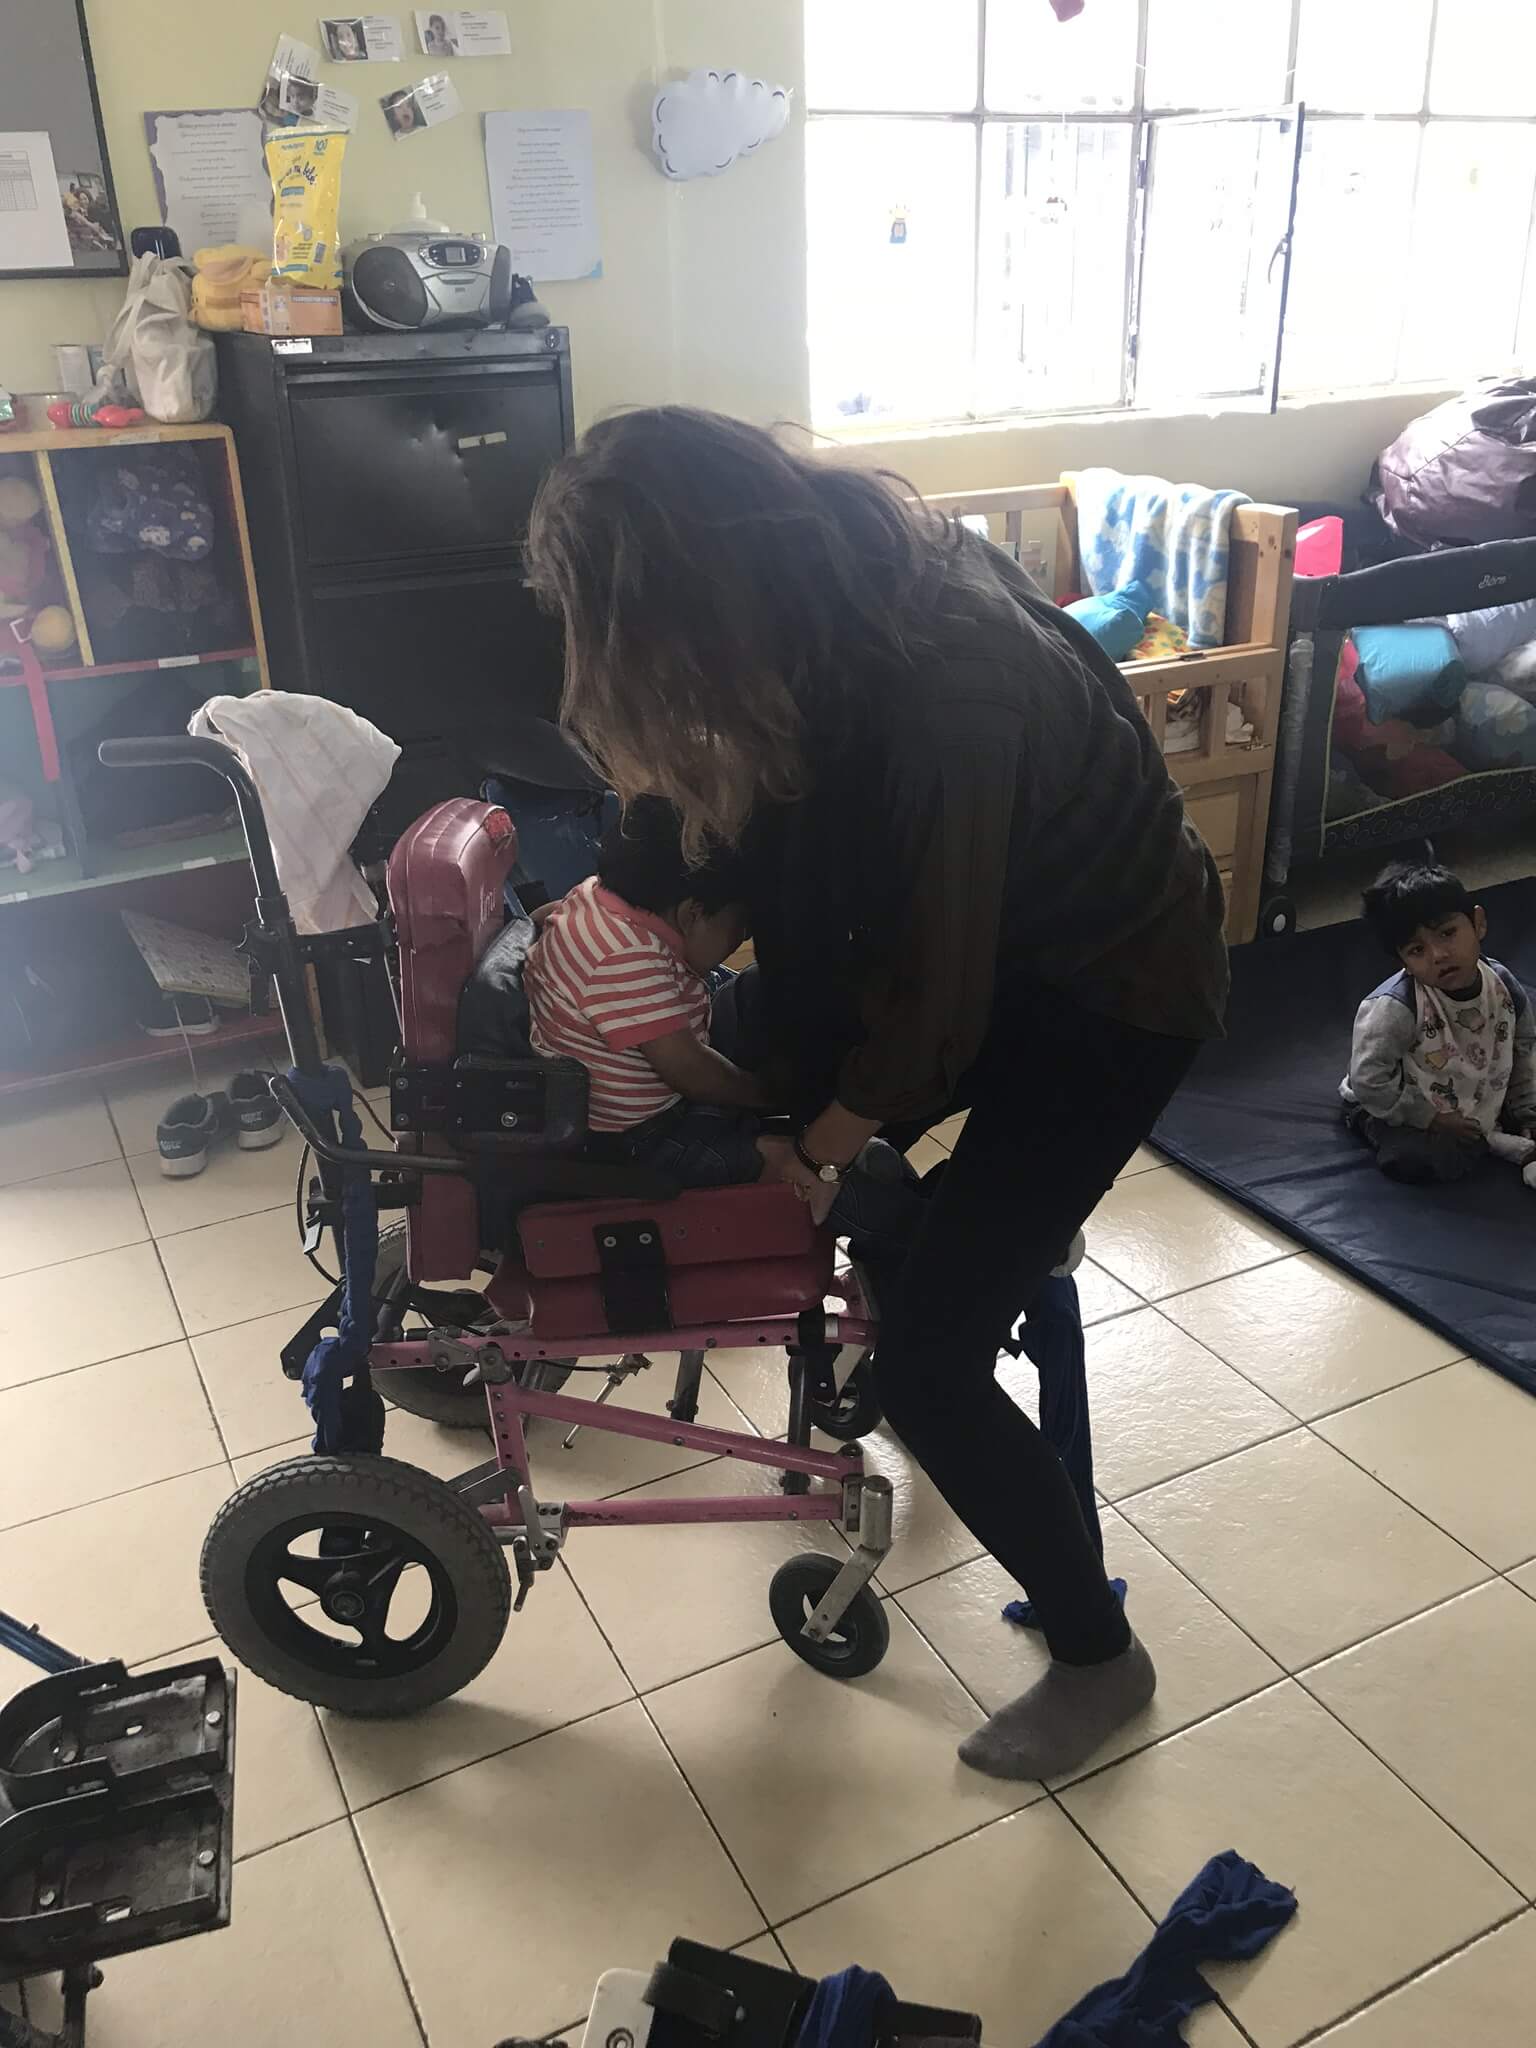 Frewillige hilft Kind in Rollstuhl